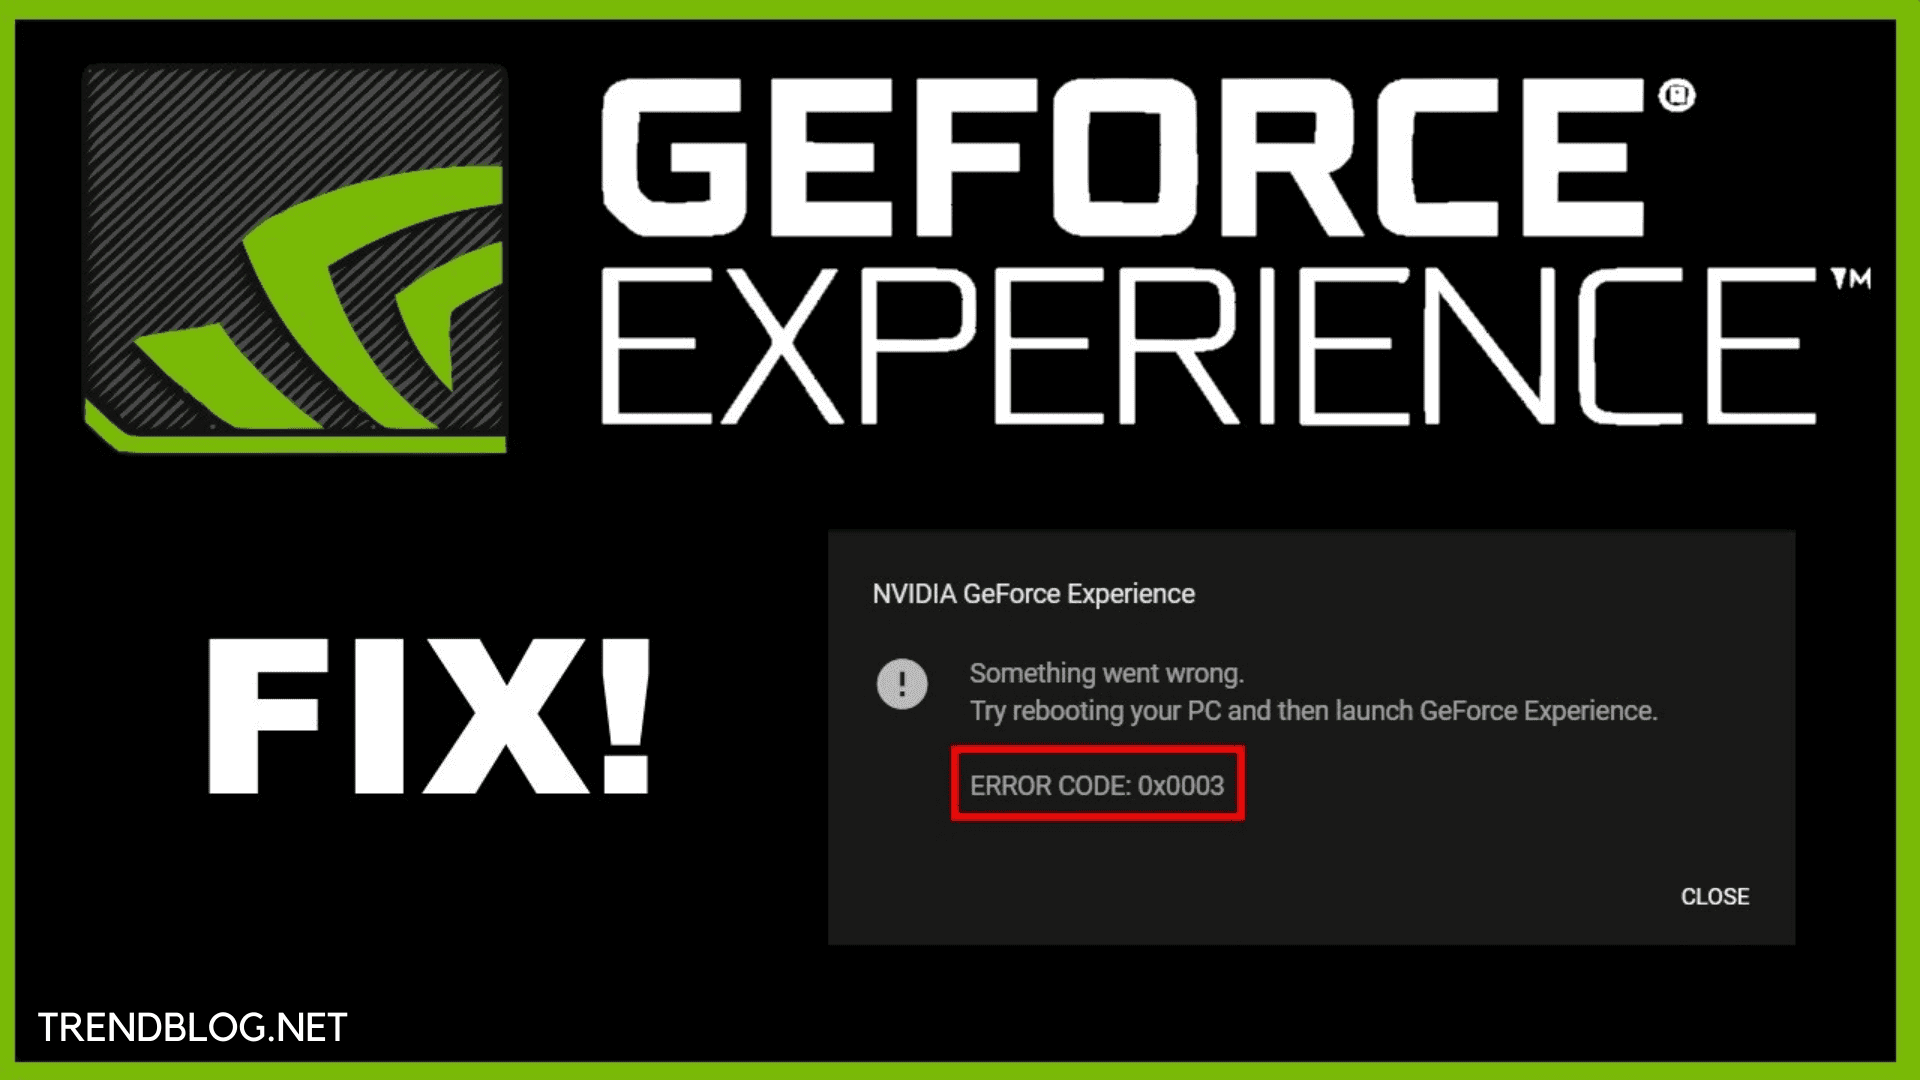 Error code accessdenied code. Джифорс экспириенс. NVIDIA GEFORCE experience. Код GEFORCE experience. Ошибка 0x0003 GEFORCE experience.